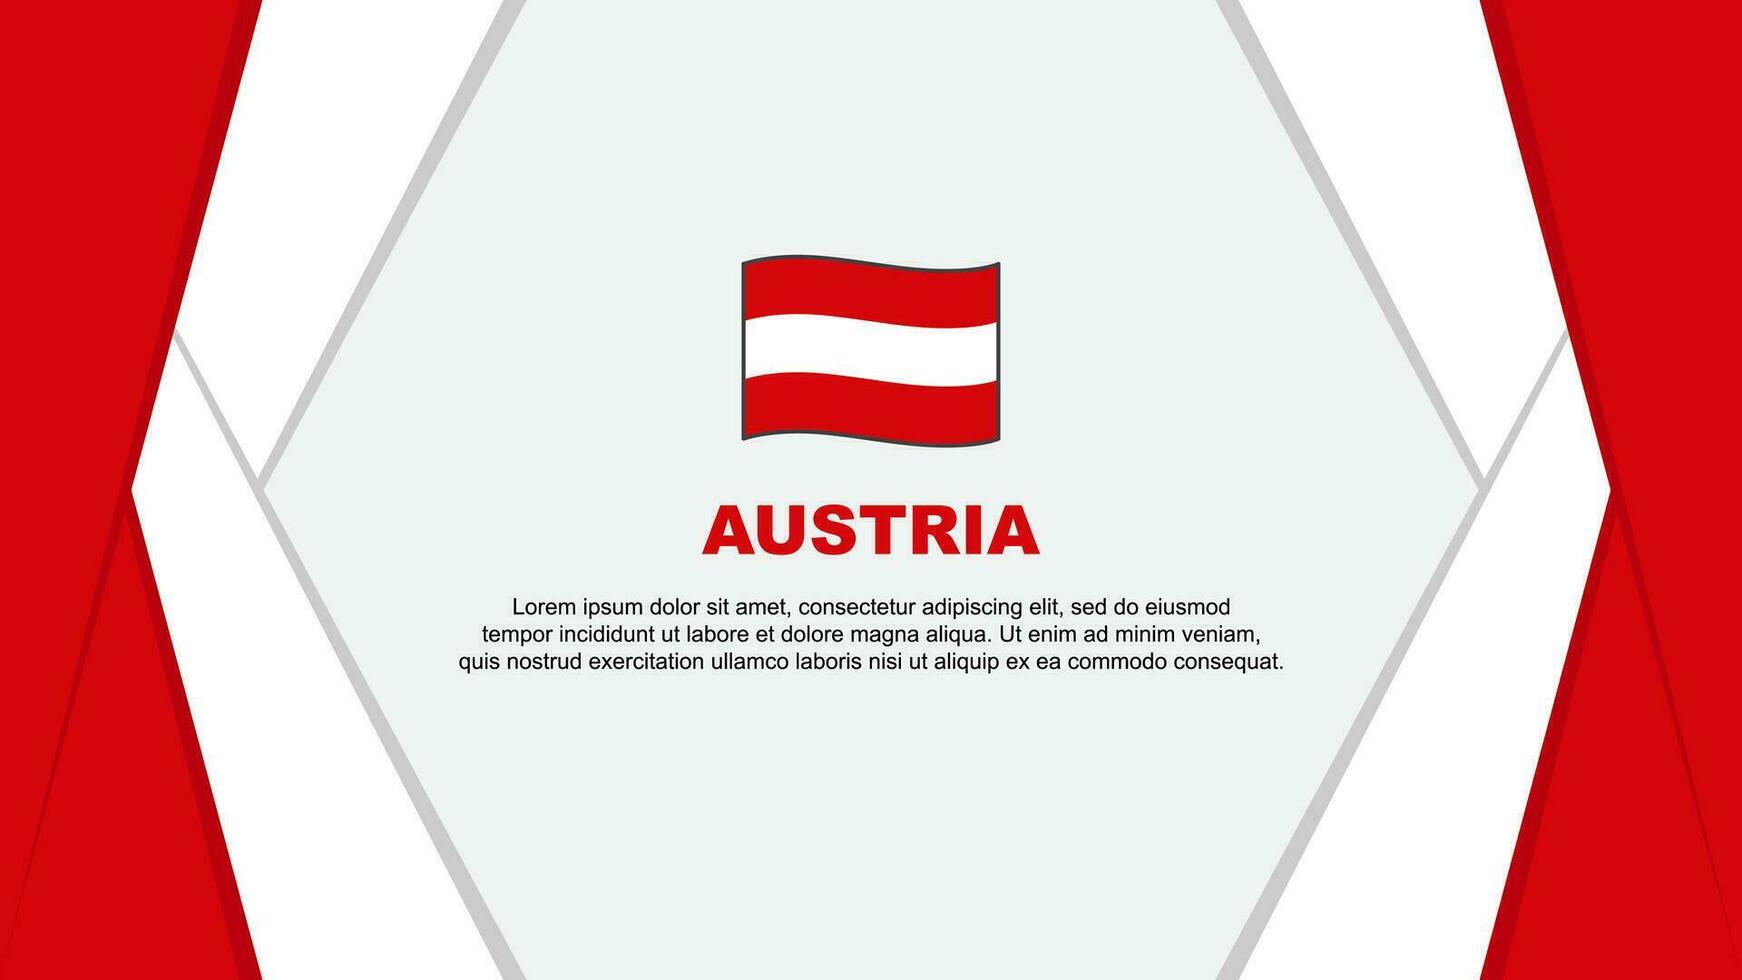 Austria Flag Abstract Background Design Template. Austria Independence Day Banner Cartoon Vector Illustration. Austria Background